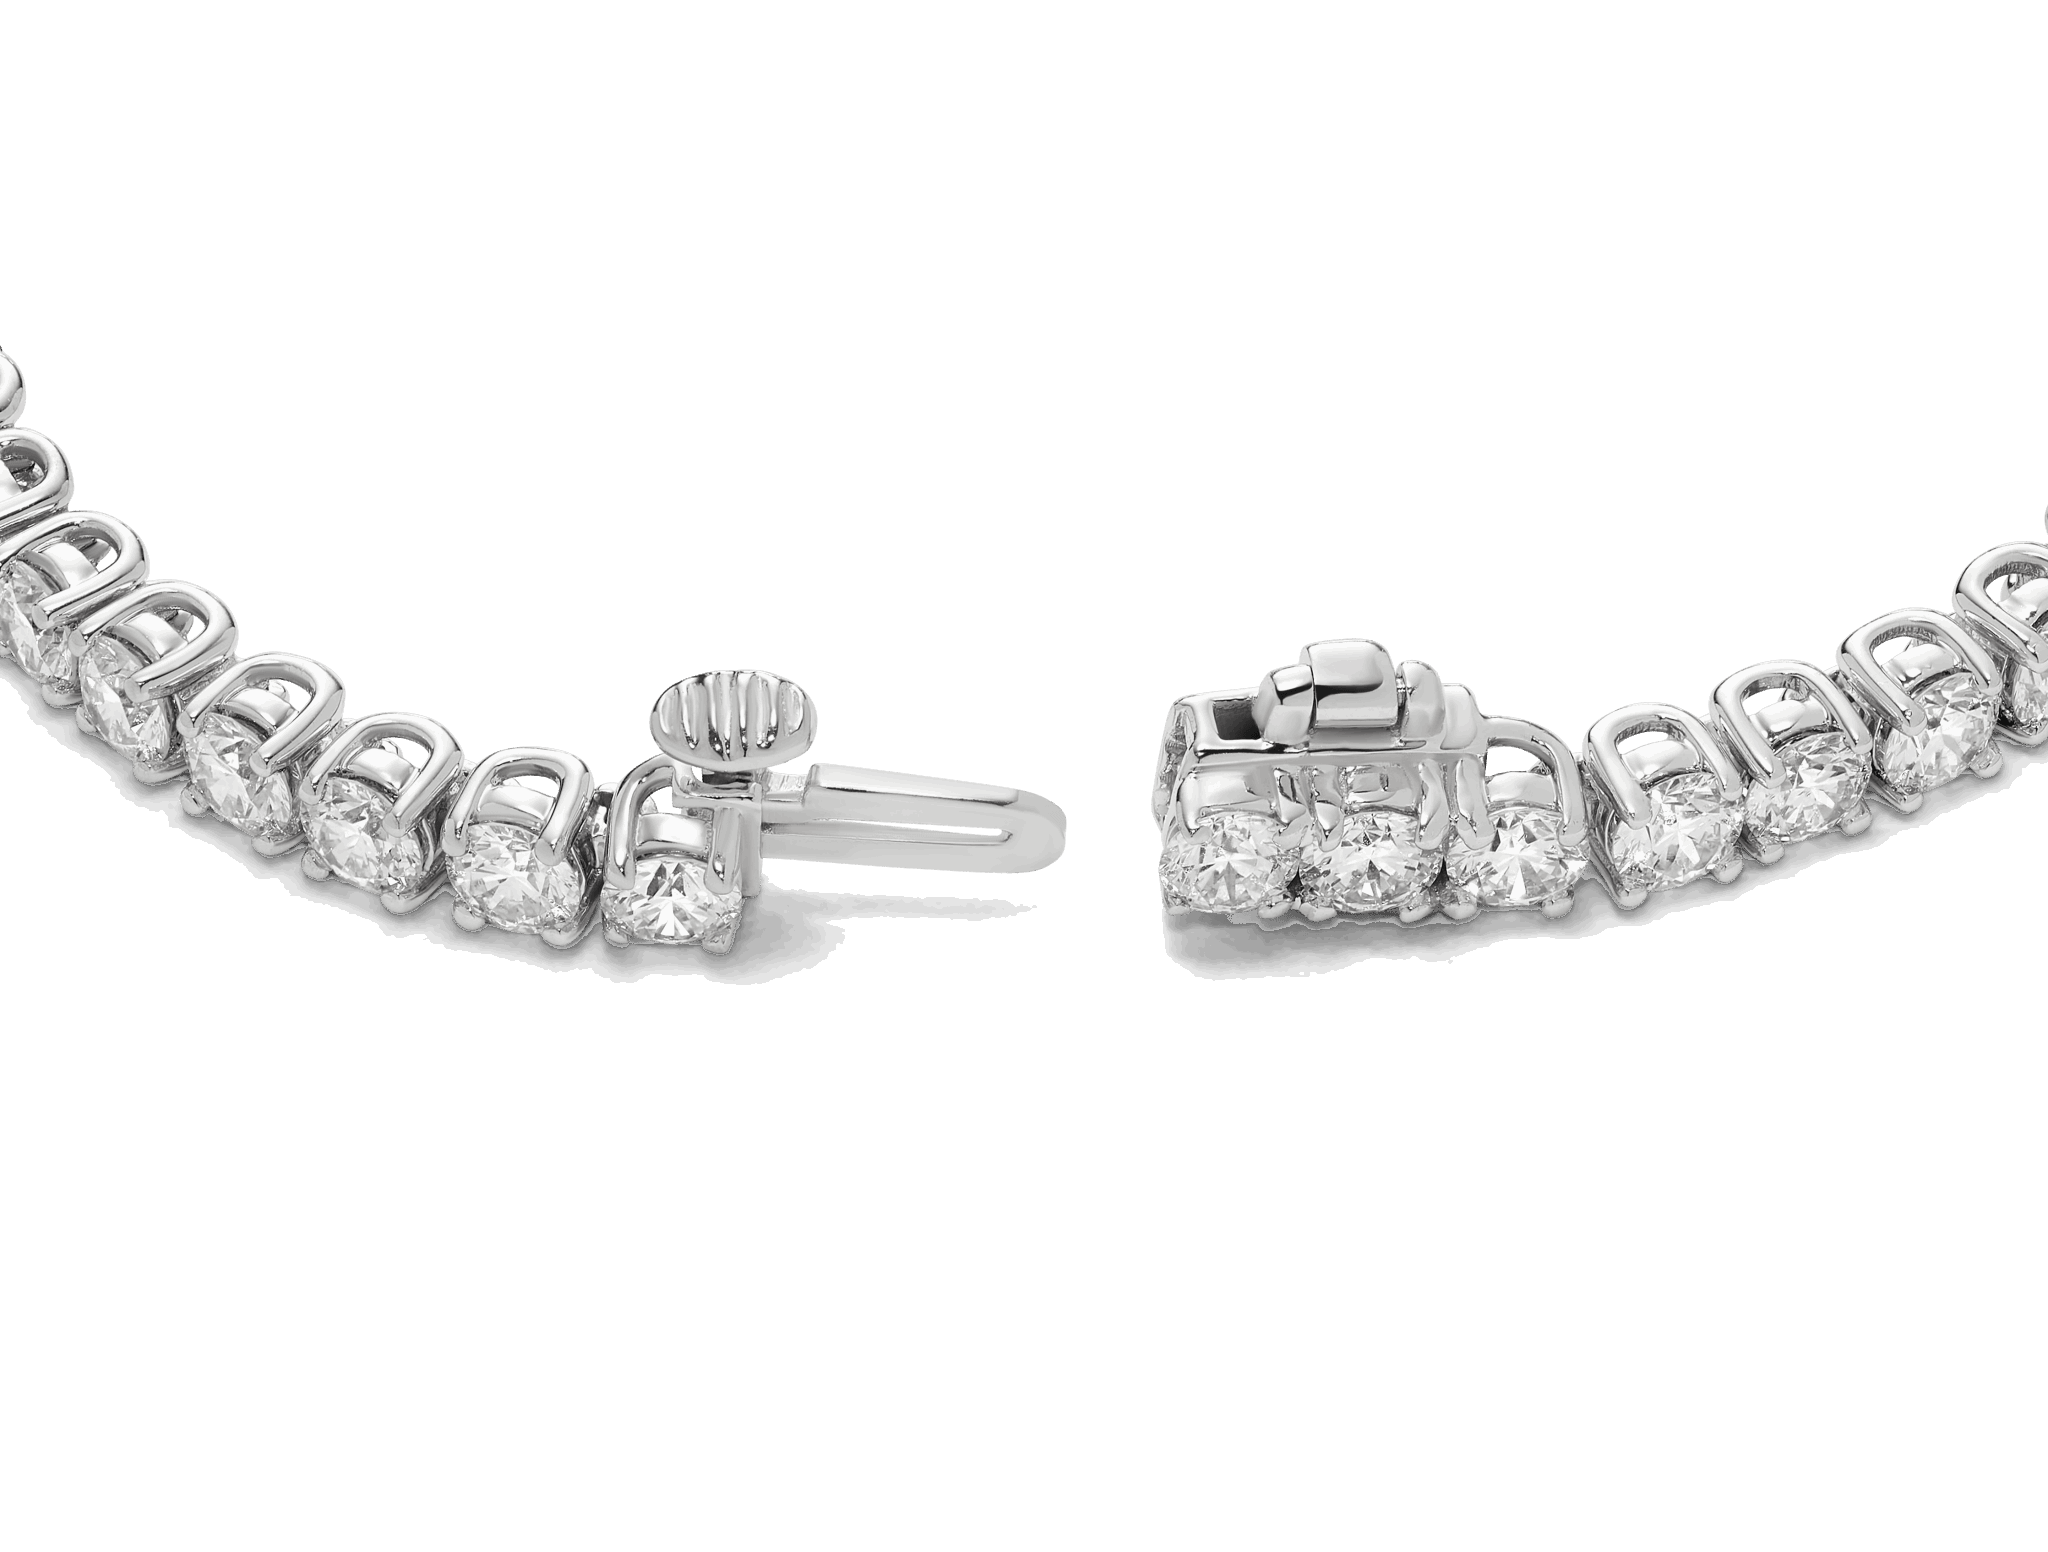 Lab-Grown Diamond Small Tennis Bracelet - E/F color, 6.5" length | White - #Lightbox Jewelry#